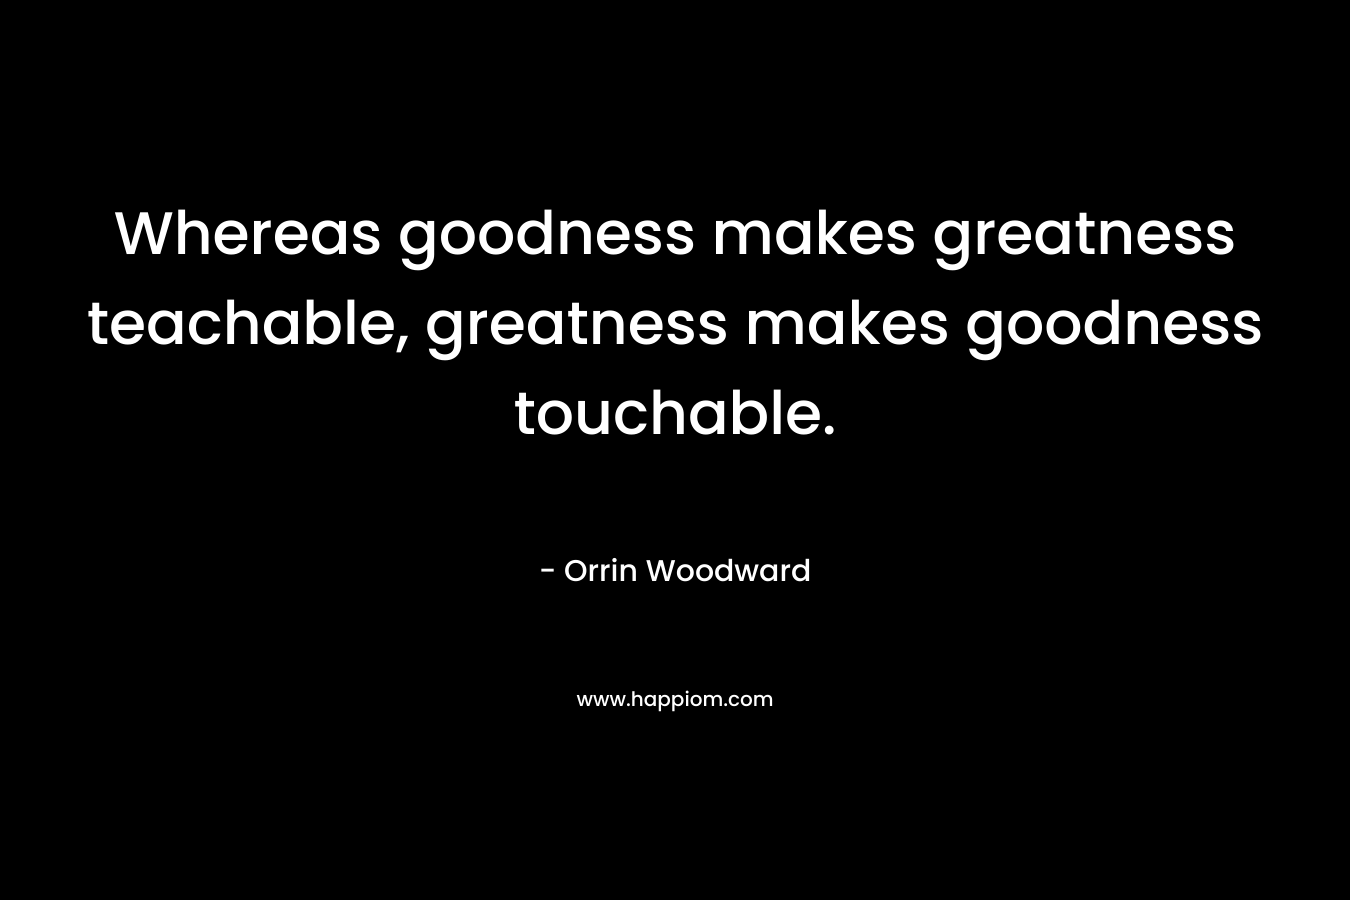 Whereas goodness makes greatness teachable, greatness makes goodness touchable.